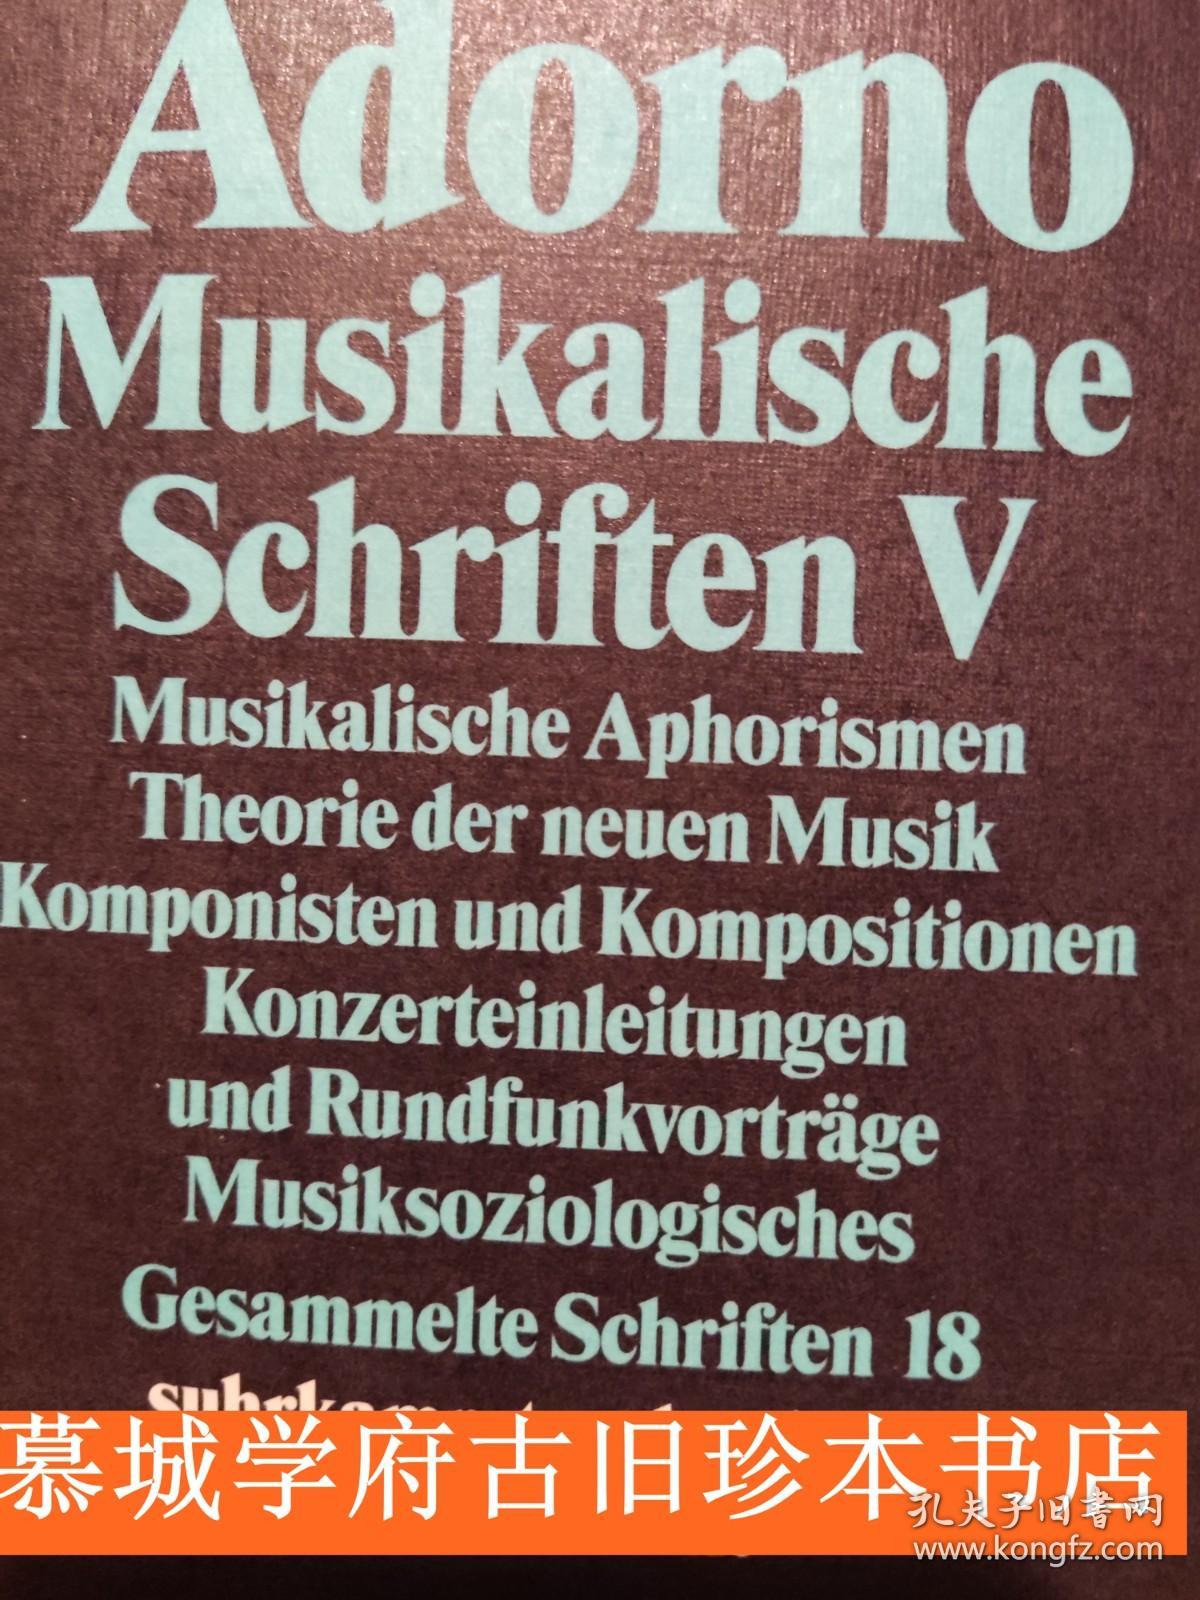 【包邮】德国哲学家《阿多尔诺全集》第十八册《音乐论文5》Adorno：Gesammelte Schriften 18: Musikalische Schriften V: Musikalische Aphorismen - Theorie der neuen Musik - Komponisten und Kompositionen -  Konzerteinleitungen und